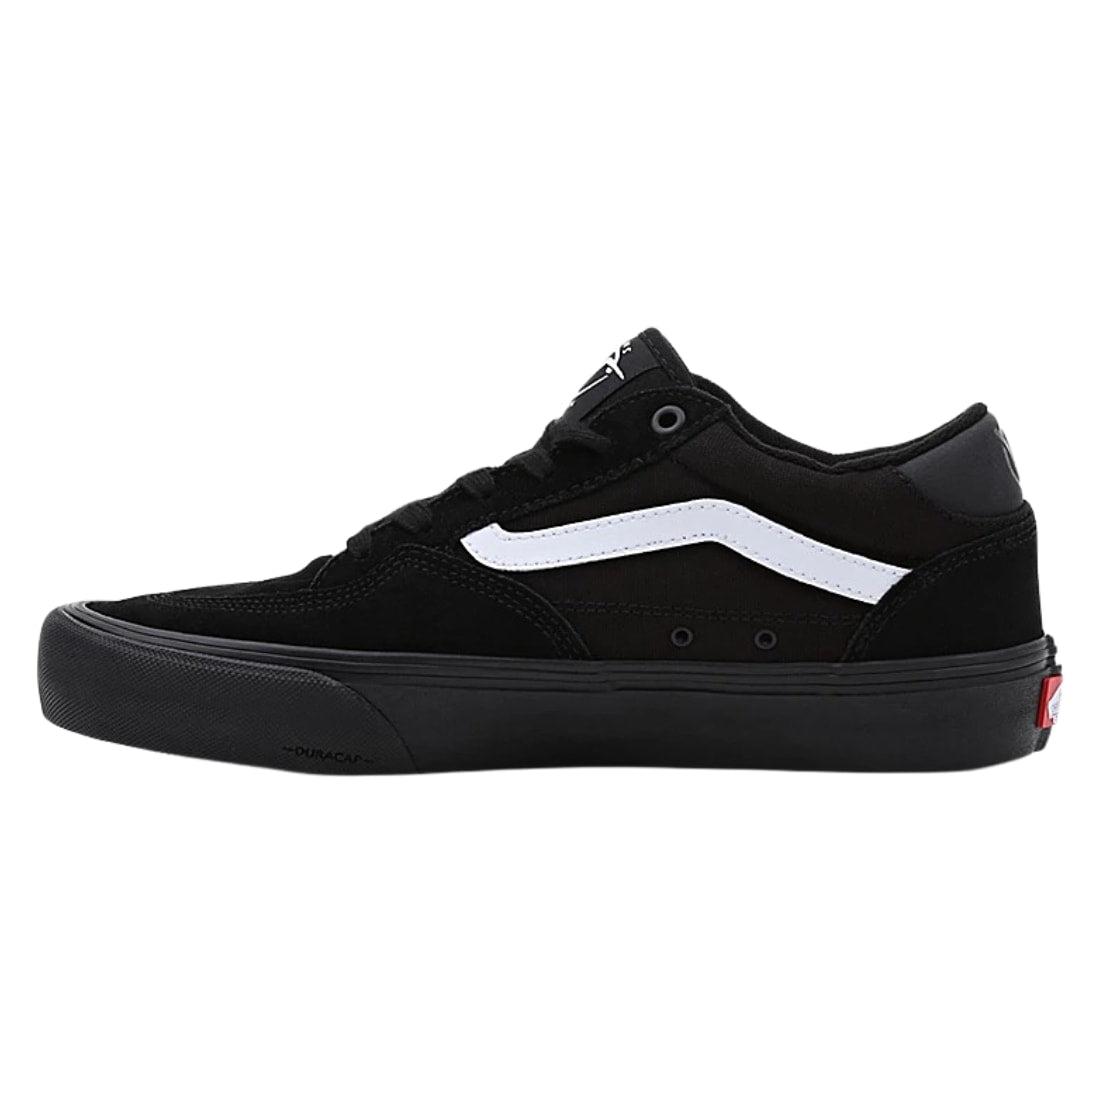 Vans Rowan Skate Shoes - Black/Black/White - Mens Skate Shoes by Vans